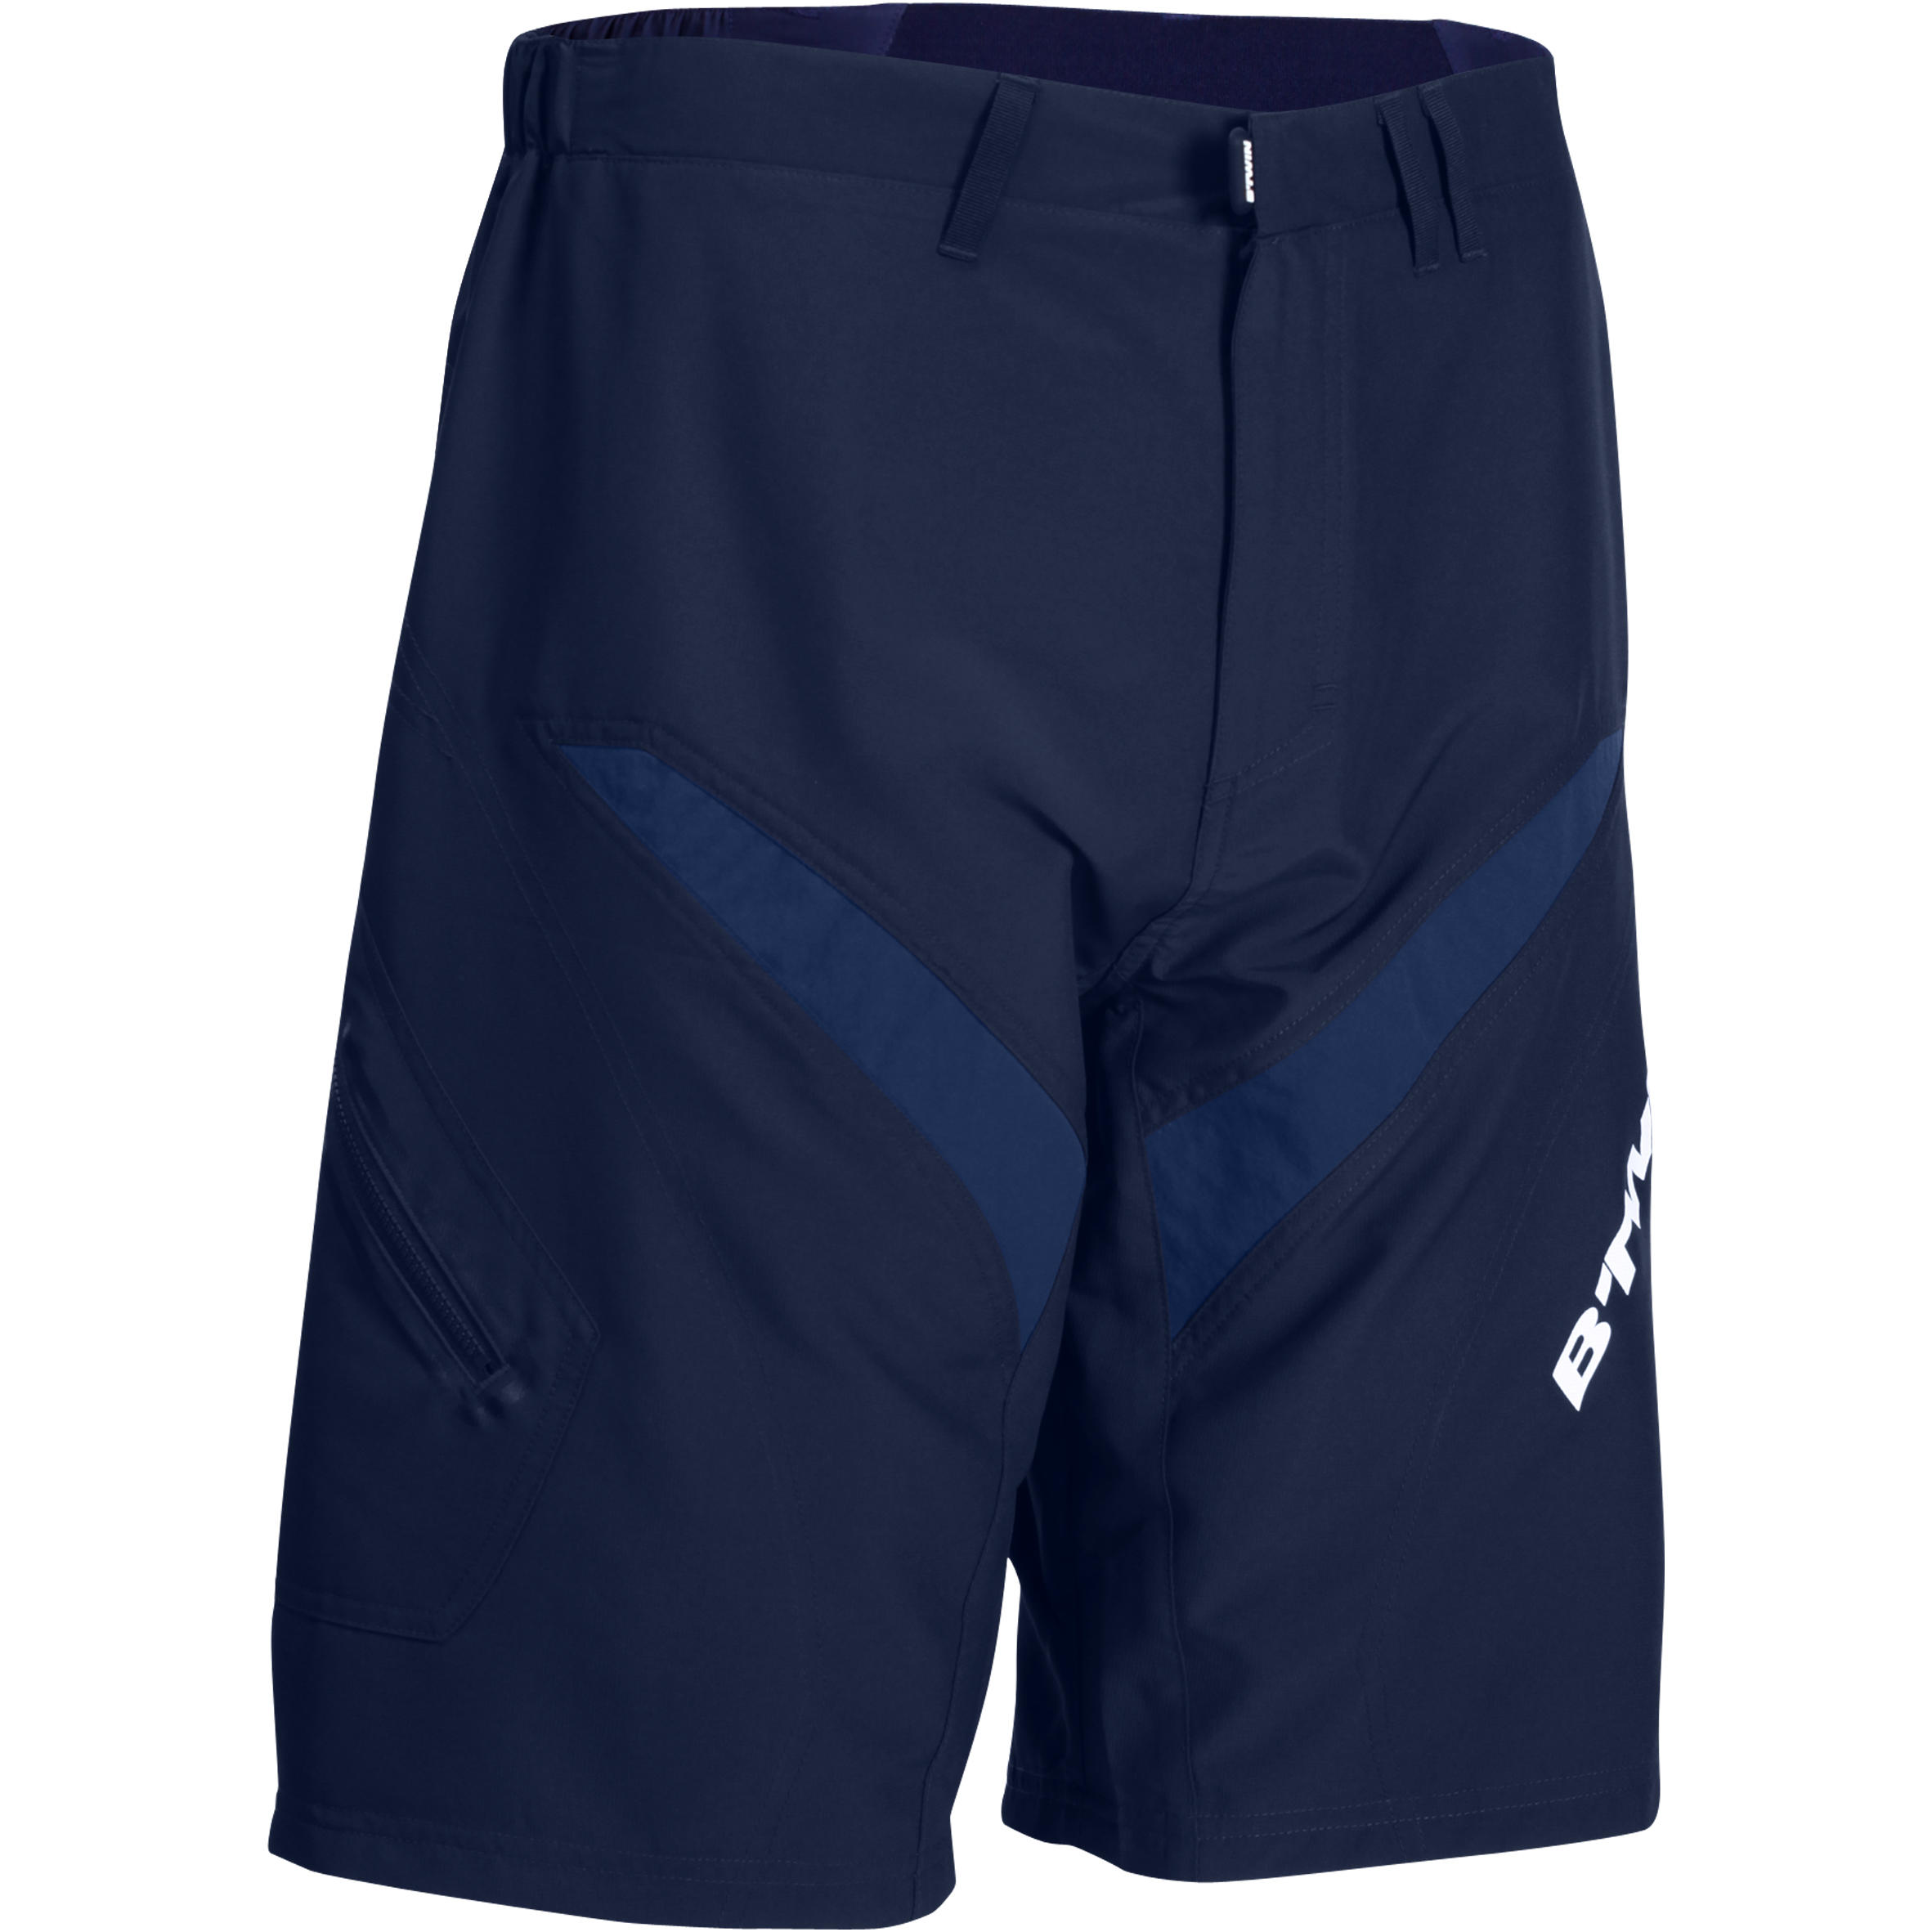 BTWIN 500 Mountain Bike Shorts - Blue